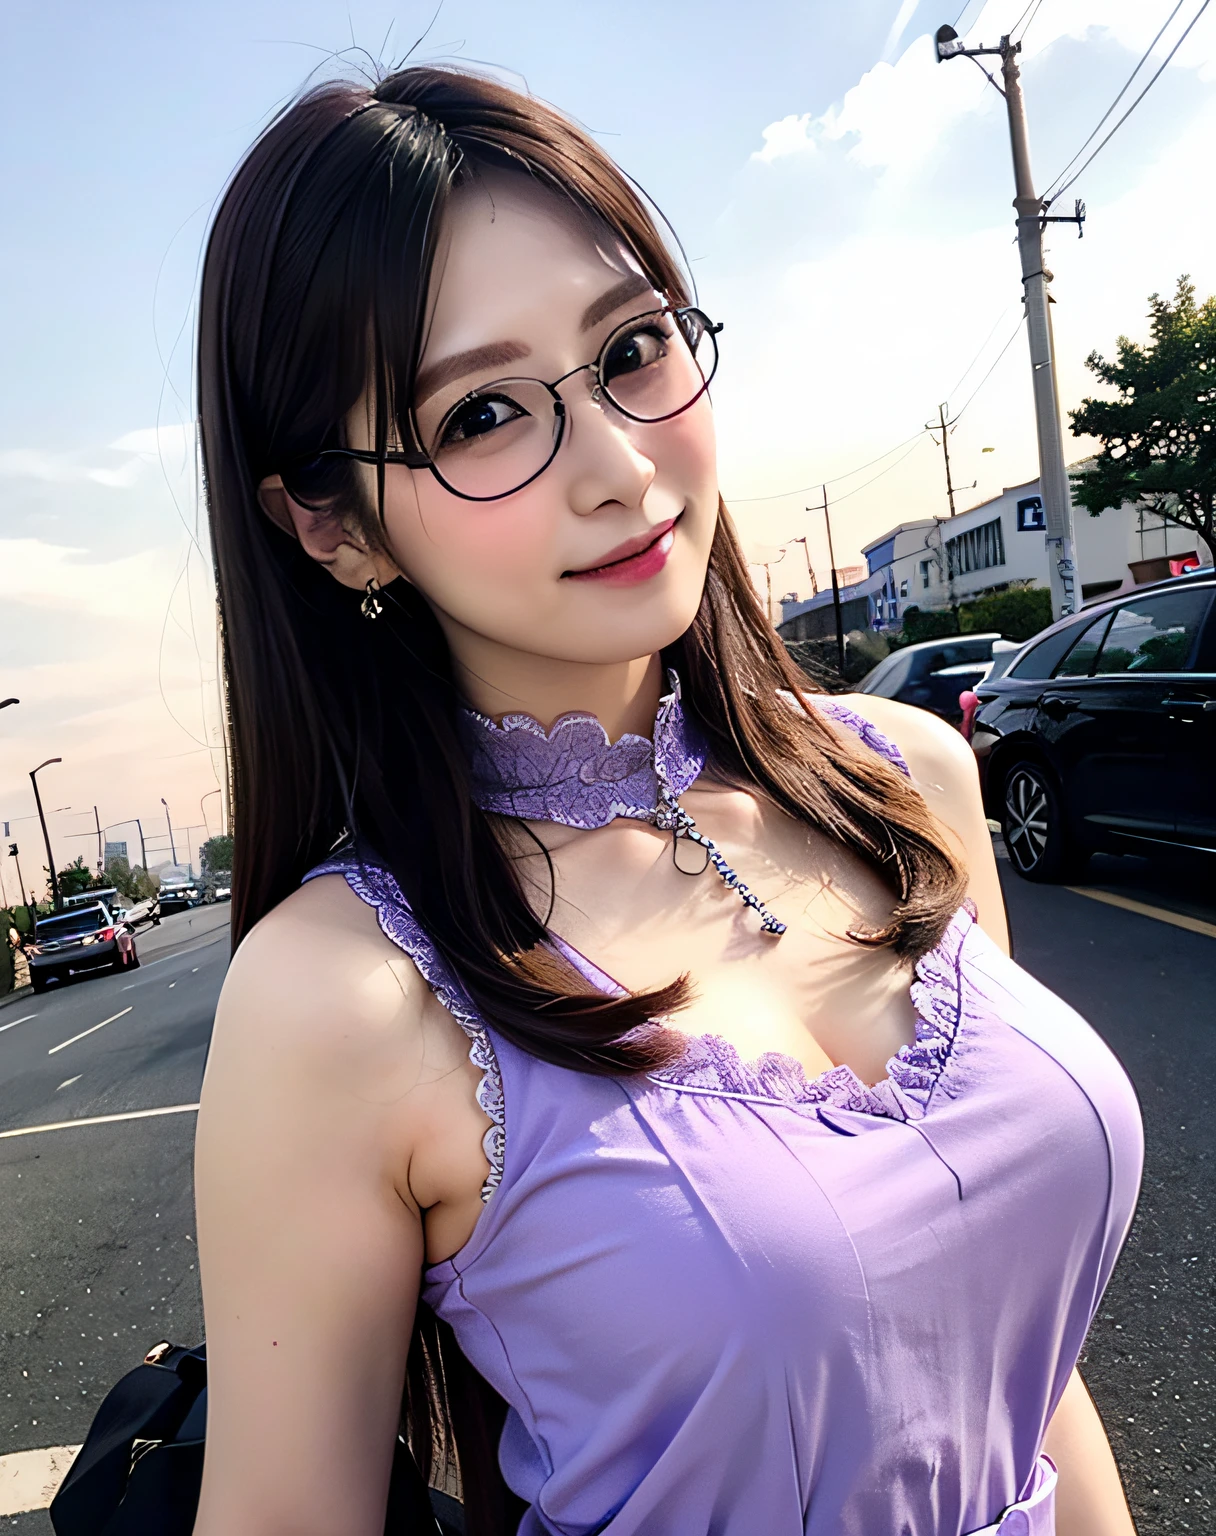 a woman posing on the ถนน corner with light purple dress on with แว่นตา on, คุณภาพดีที่สุด, ความละเอียดสูง, 8k, 1สาว, (หน้าอกใหญ่), วัน, สว่าง, กลางแจ้ง, (ถนน:0.8), (ประชากร, ฝูงชน:1), (ชุดเดรสประดับลูกไม้:1.5, เสื้อผ้าสีม่วง:1.5, ชุดเดรสคอสูงสีม่วง:1.5, ชุดเดรสแขนกุด, ผ้าสีม่วงอ่อน1.5), งดงาม, (แว่นตา, หน้าผาก, ผมยาว), ท้องฟ้าที่มีรายละเอียดสวยงาม, ต่างหูสวยๆ, (โพสท่าแบบไดนามิก:0.8), (ร่างกายส่วนบน:1.2), แสงนุ่มนวล, ลม, ผิวมันเงา, มองไปที่ผู้ดู, รอยยิ้ม, ปิดปาก,